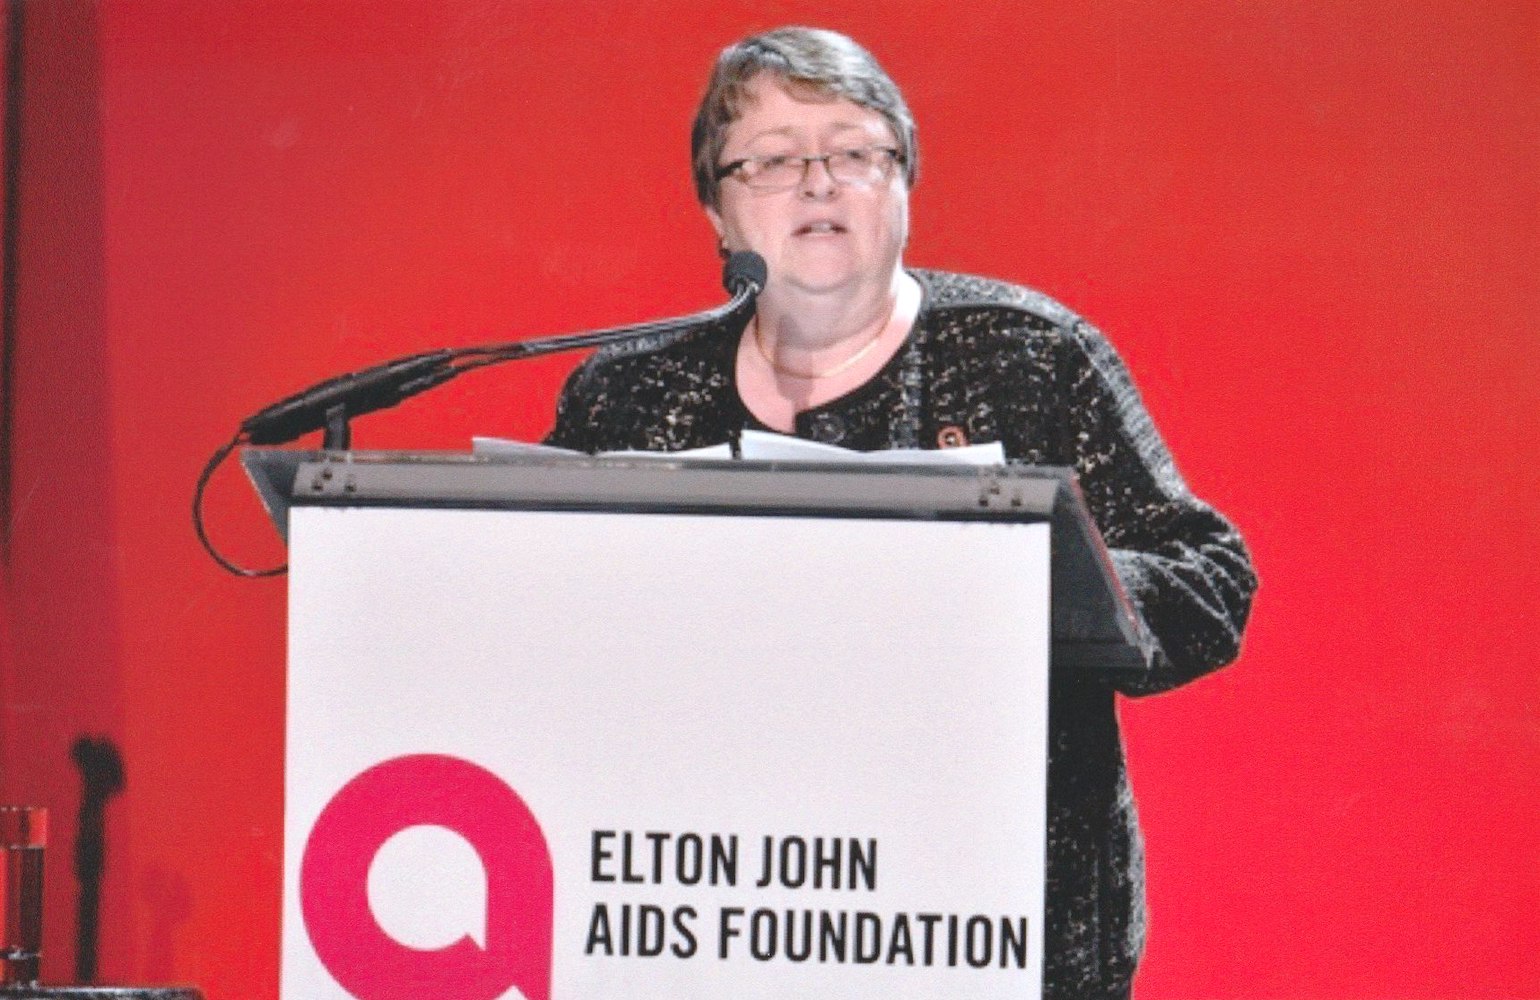 Kathie speaking at the Elton John AIDS Foundation’s Annual Gala, New York, NY, November 2016. Photo courtesy of Kathie Hiers.